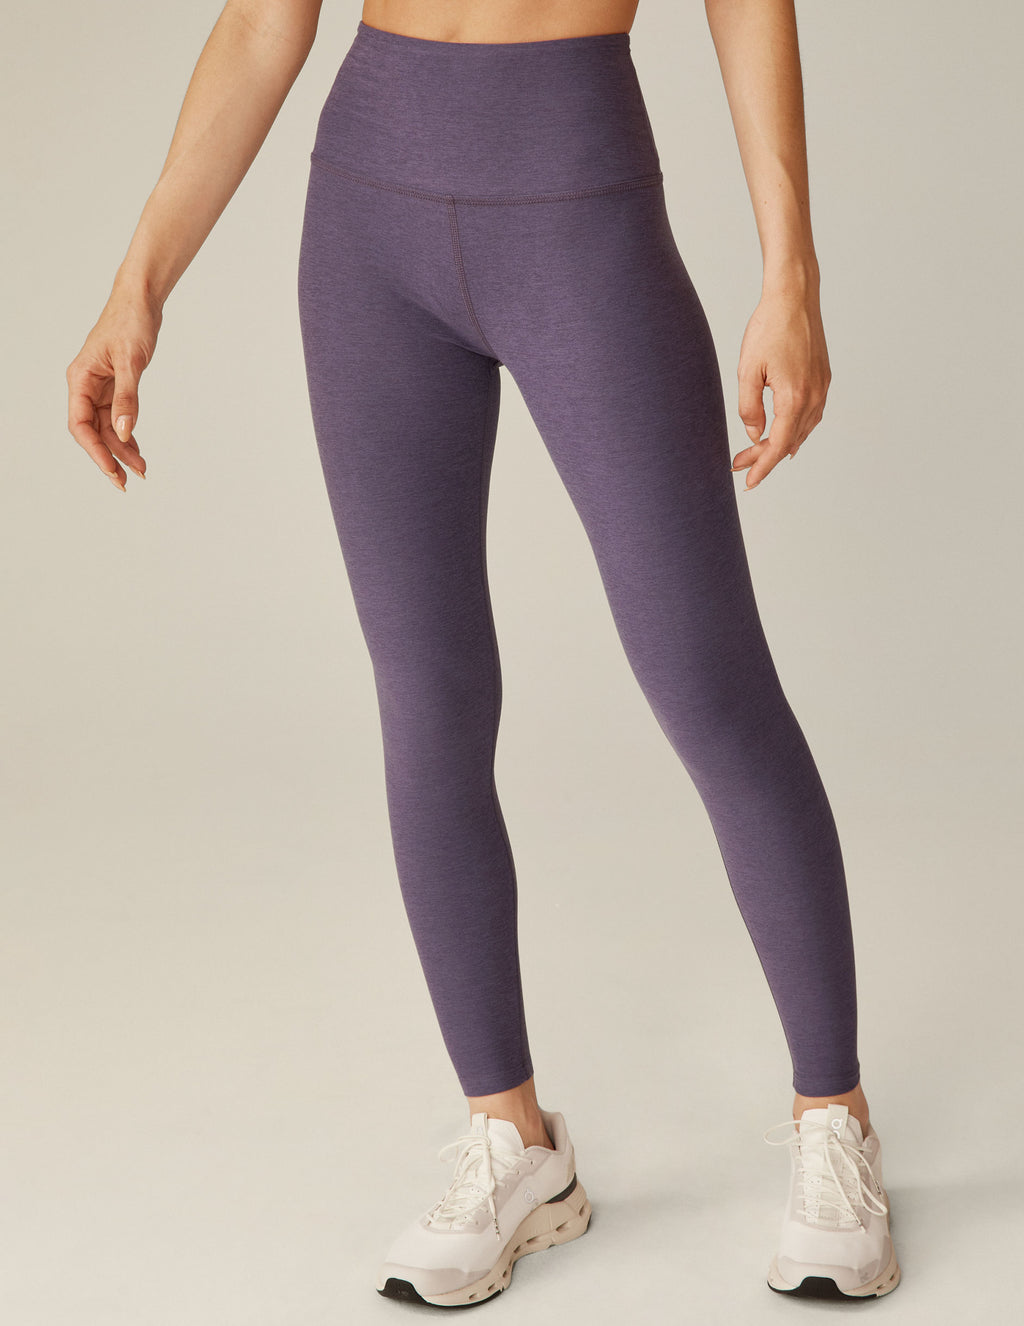 Nux Women's Shapeshifter 7/8 Length Yogs Leggings, Purple, Medium